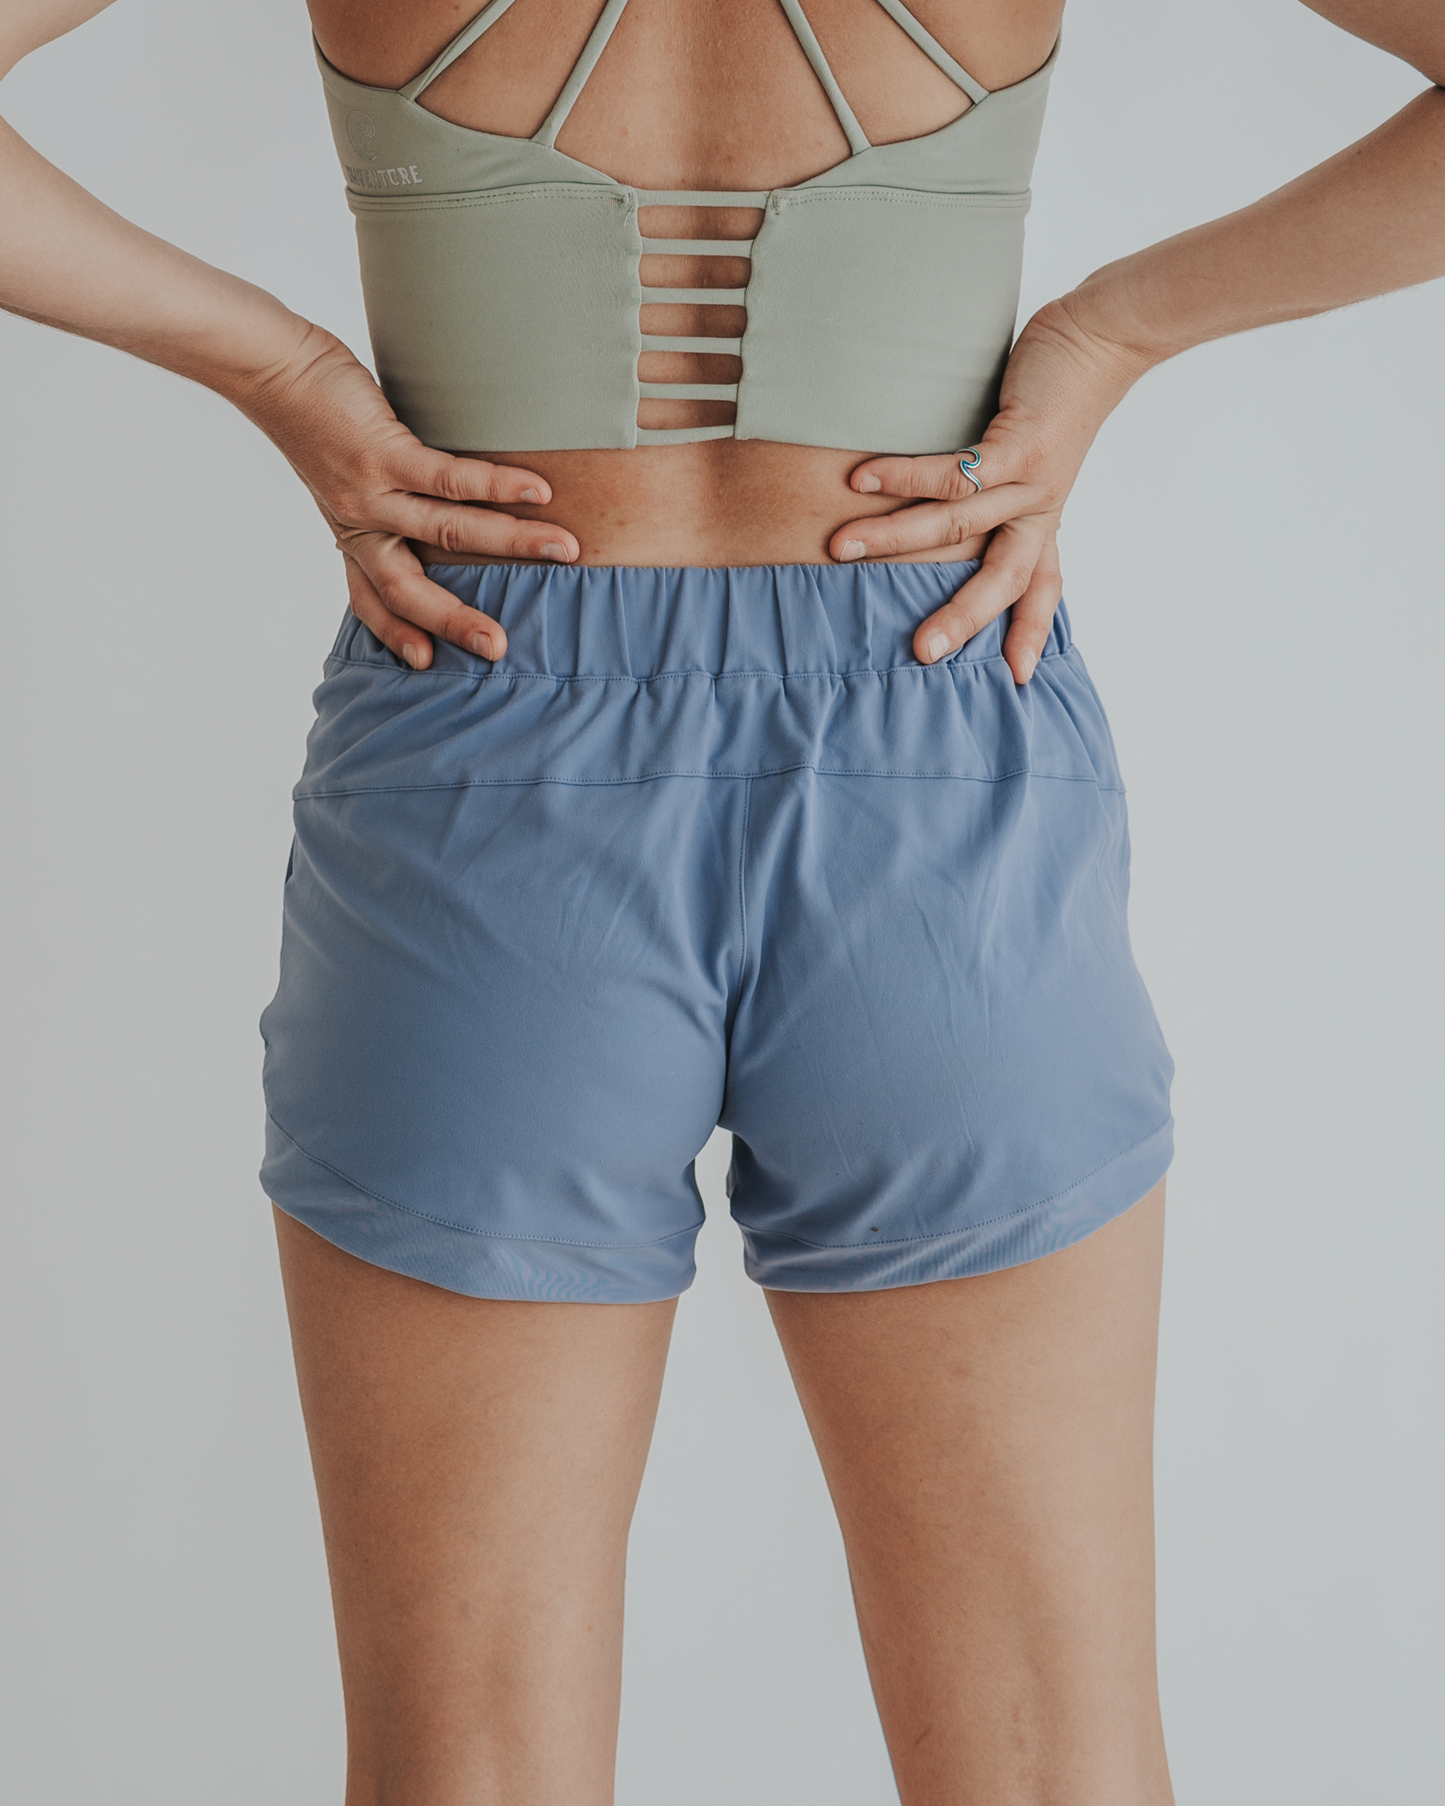 Women’s Seatec Shorts